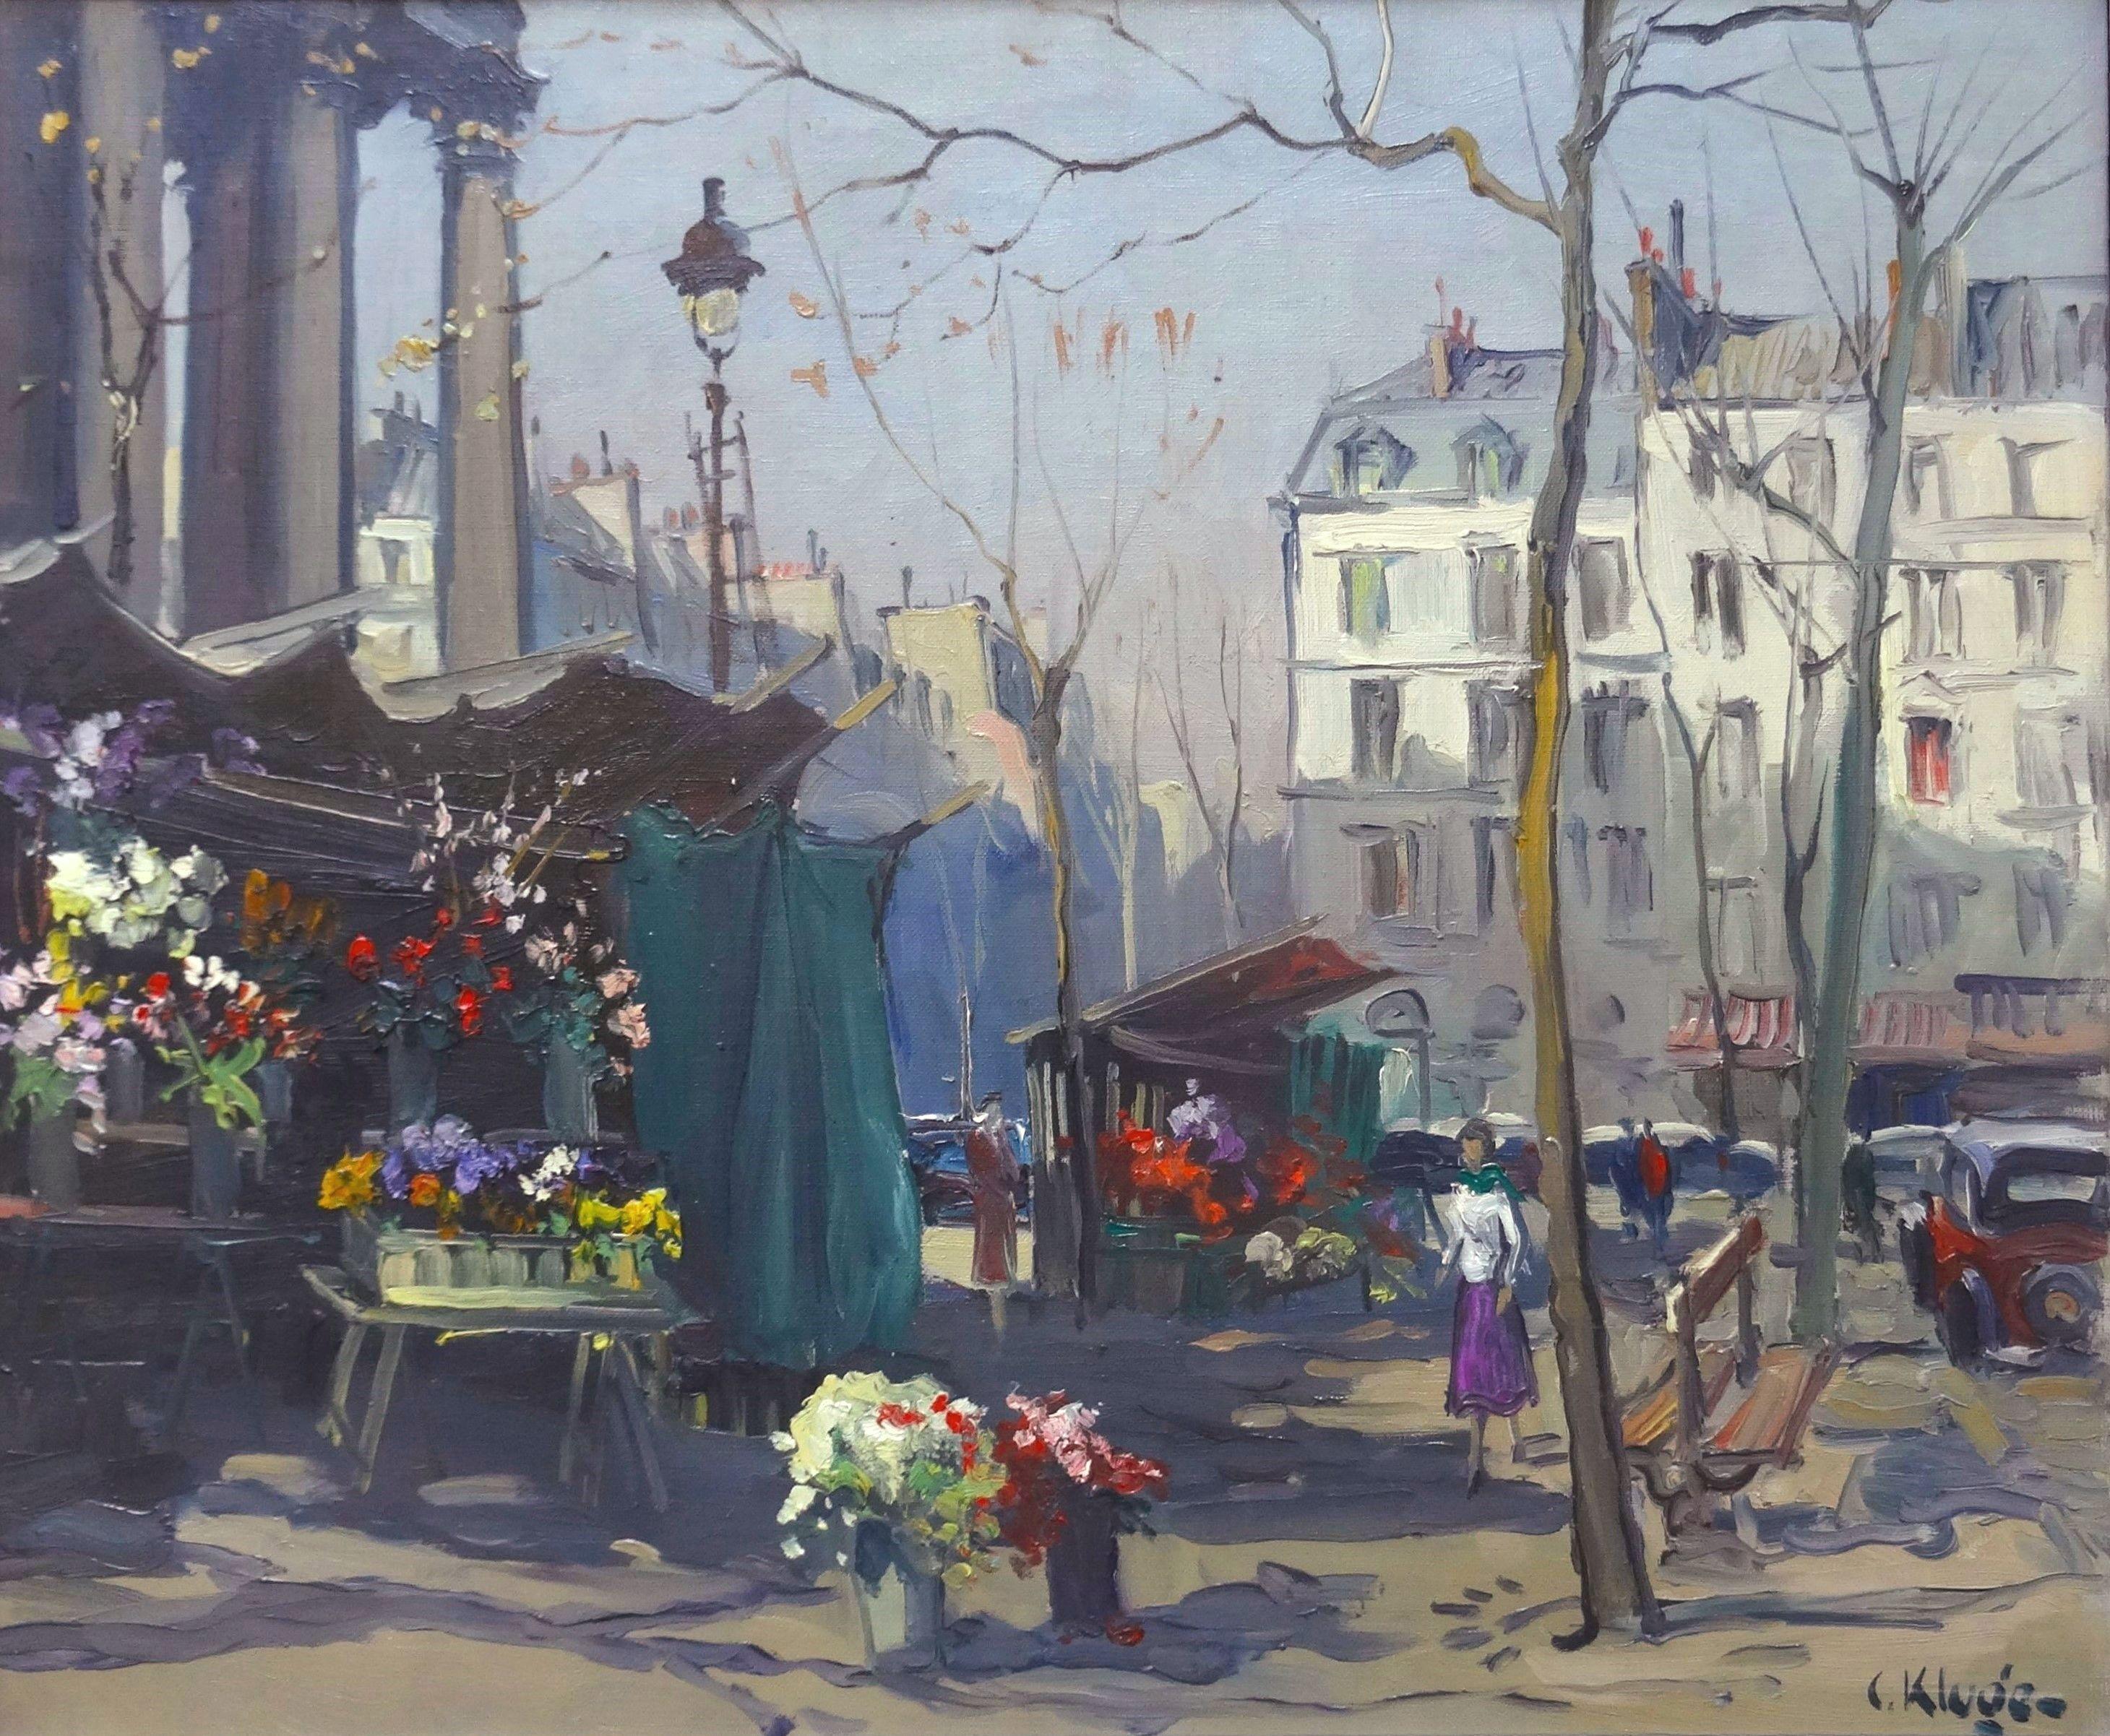 Flower market in front of the Madeleine in Paris. Oil on canvas, 54x65 cm